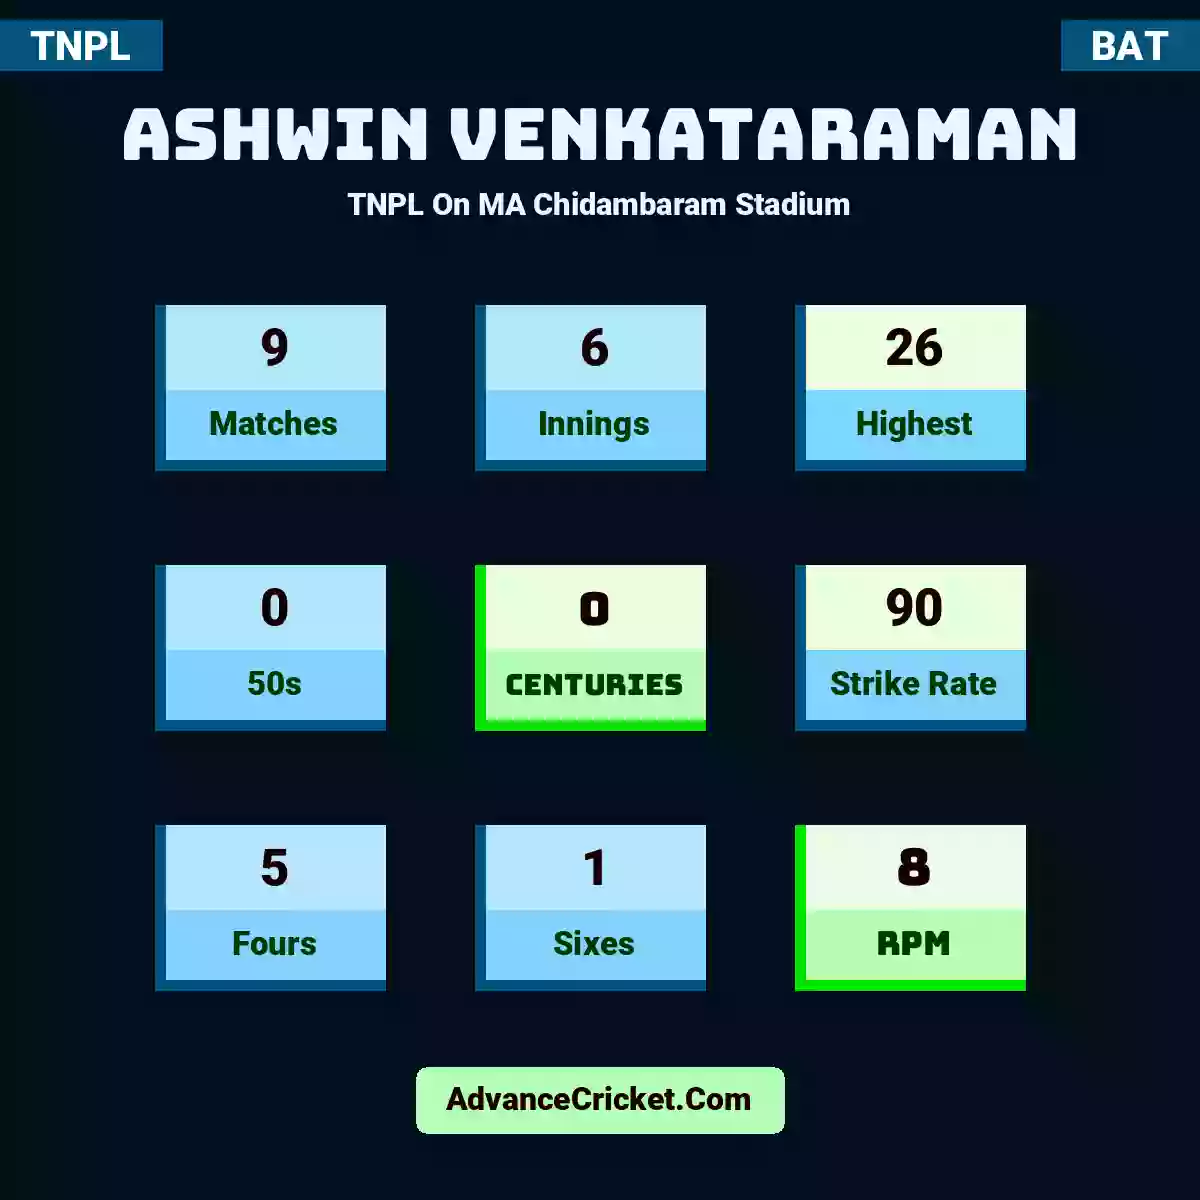 Ashwin Venkataraman TNPL  On MA Chidambaram Stadium, Ashwin Venkataraman played 9 matches, scored 26 runs as highest, 0 half-centuries, and 0 centuries, with a strike rate of 90. A.Venkataraman hit 5 fours and 1 sixes, with an RPM of 8.